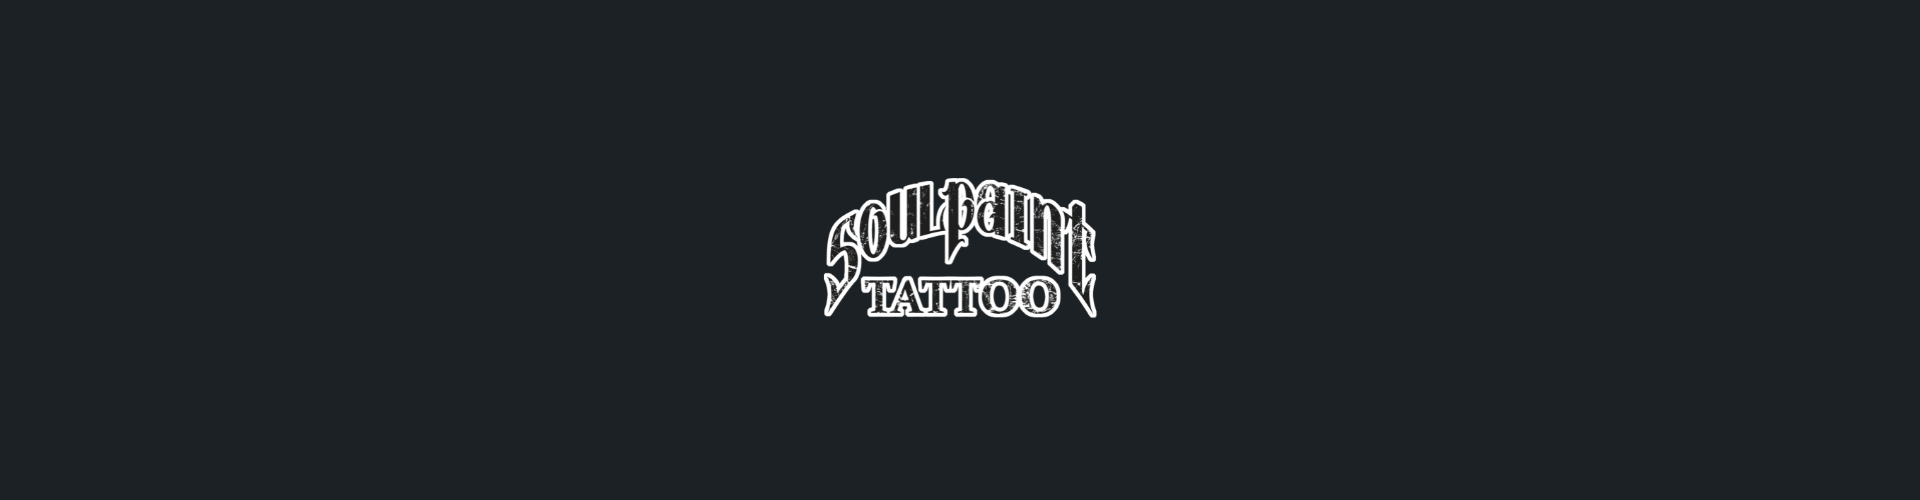 Tattoo antwerpen soulpaint tattoo